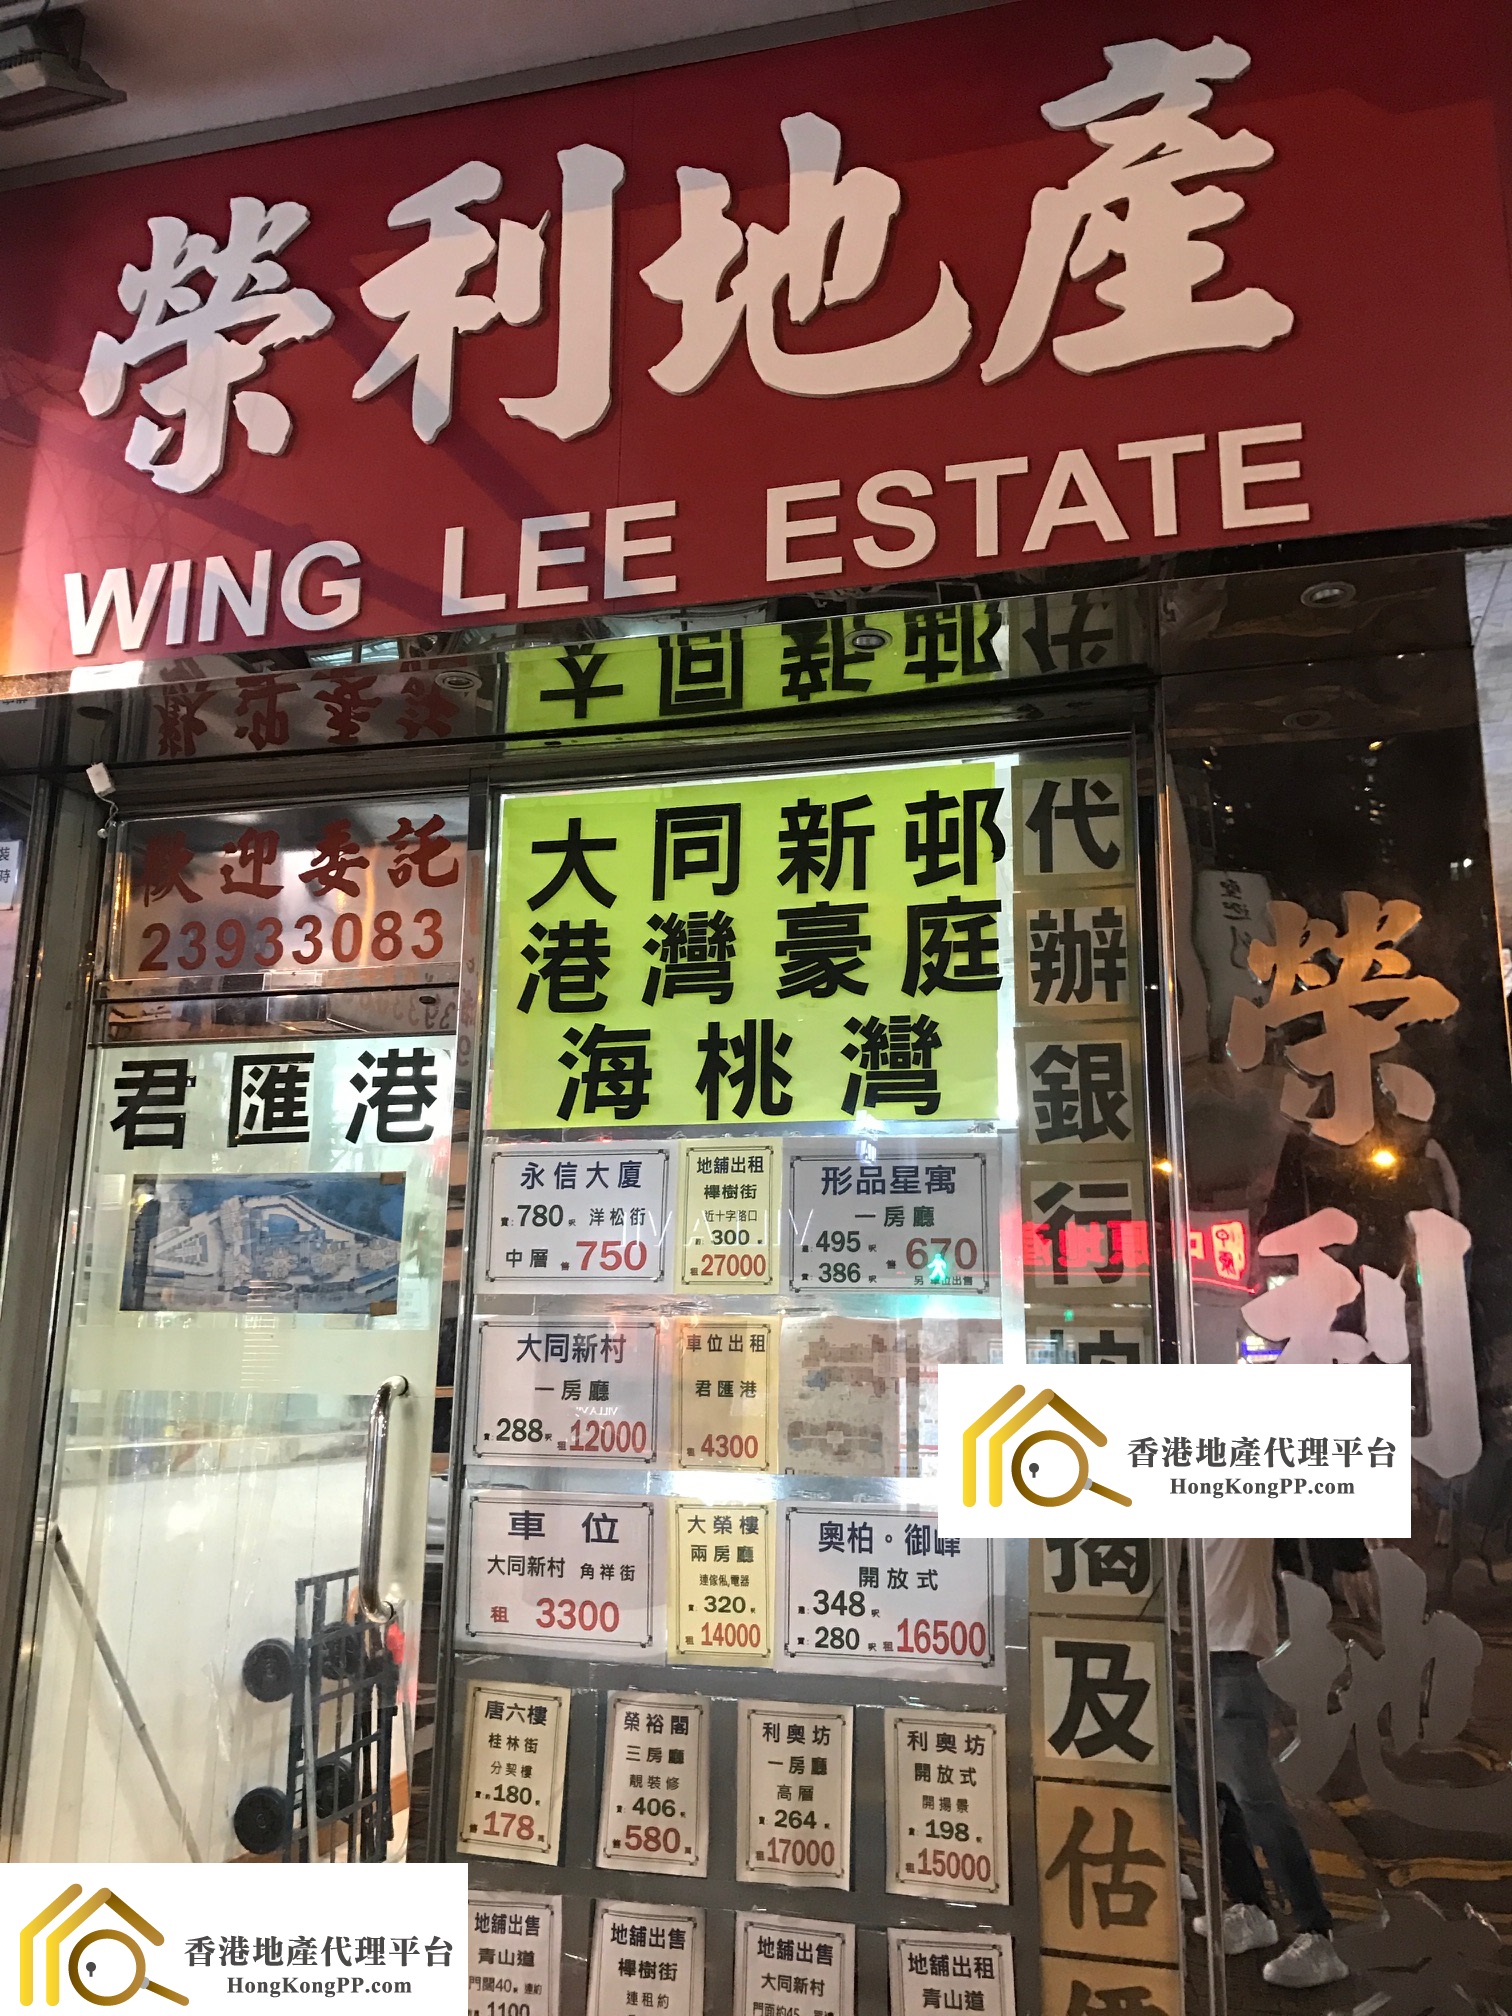 ShopEstate Agent: 榮利地產 Wing Lee Estate